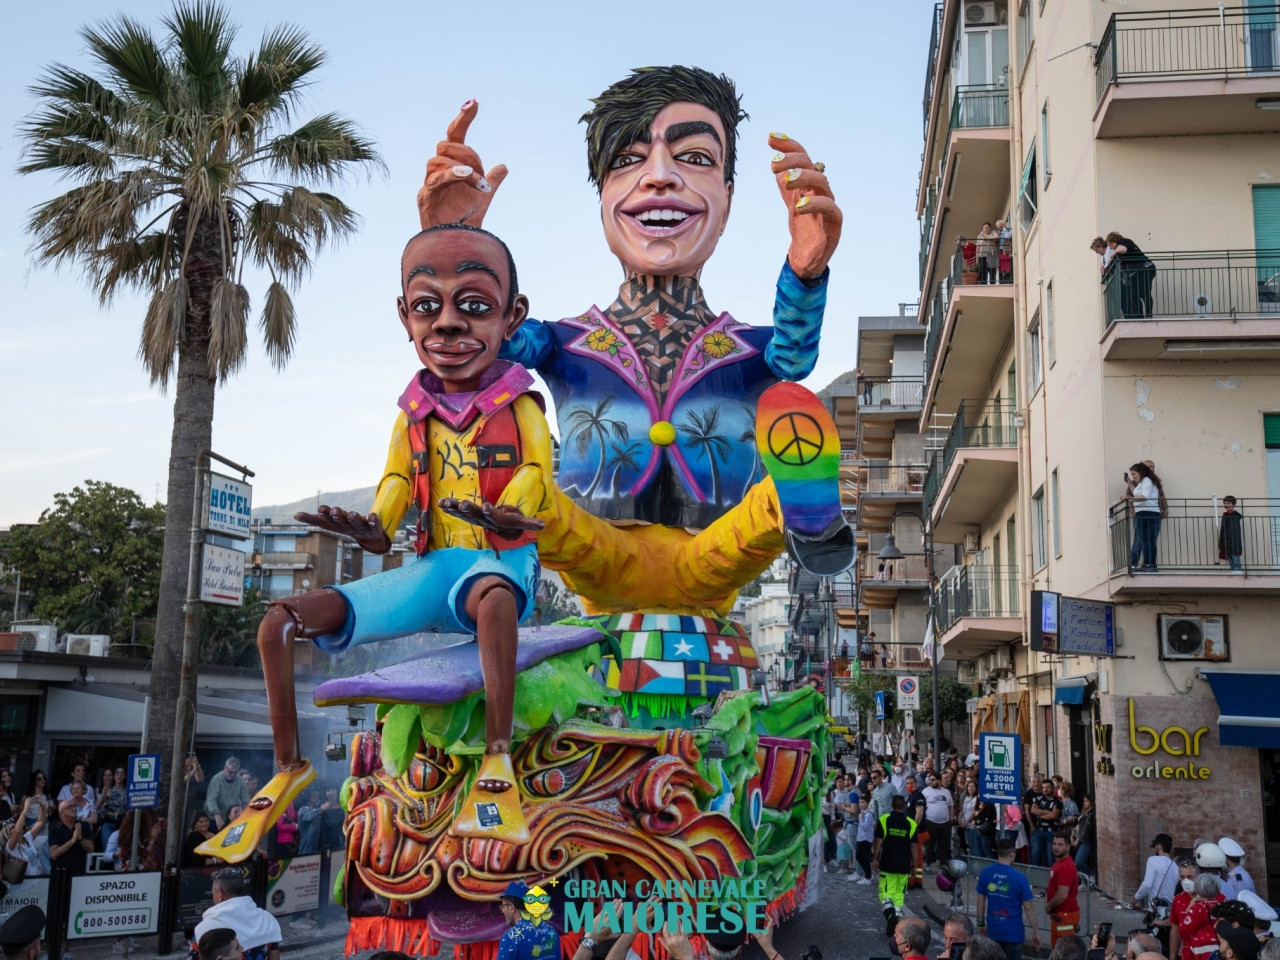 50 years of the Grand Maiori Carnival